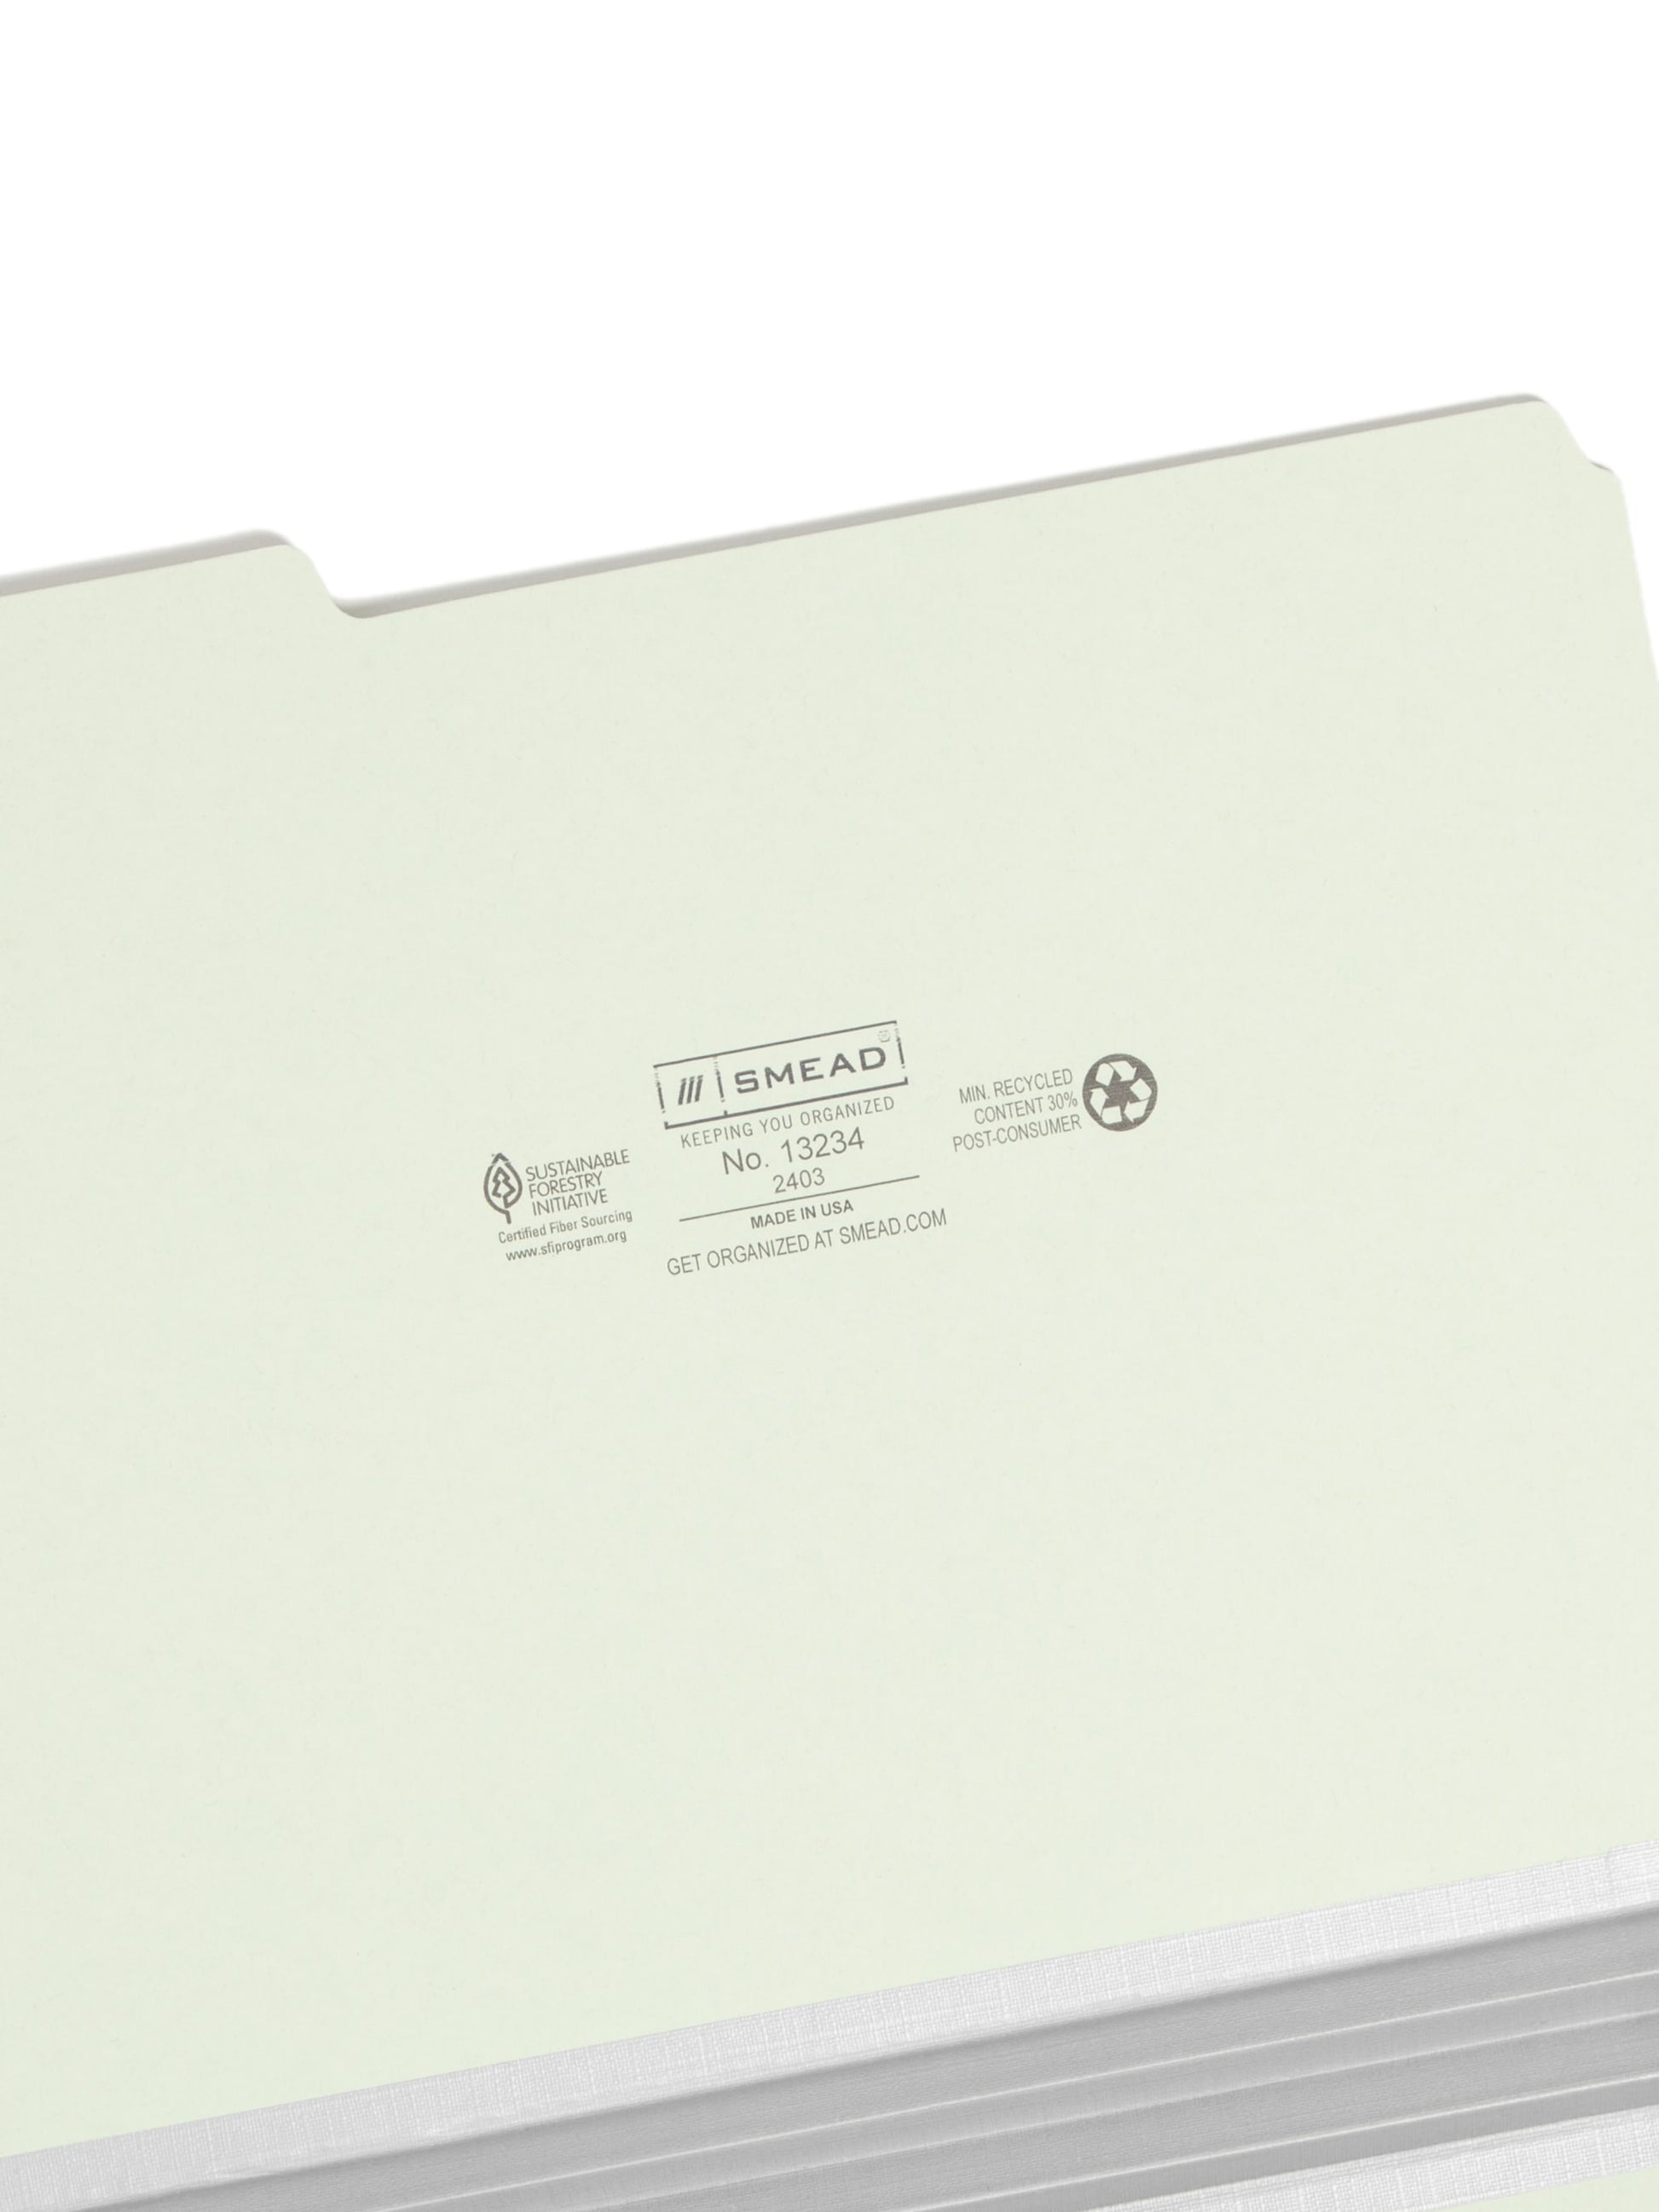 Pressboard File Folders, 2 inch Expansion, Gray/Green Color, Letter Size, 